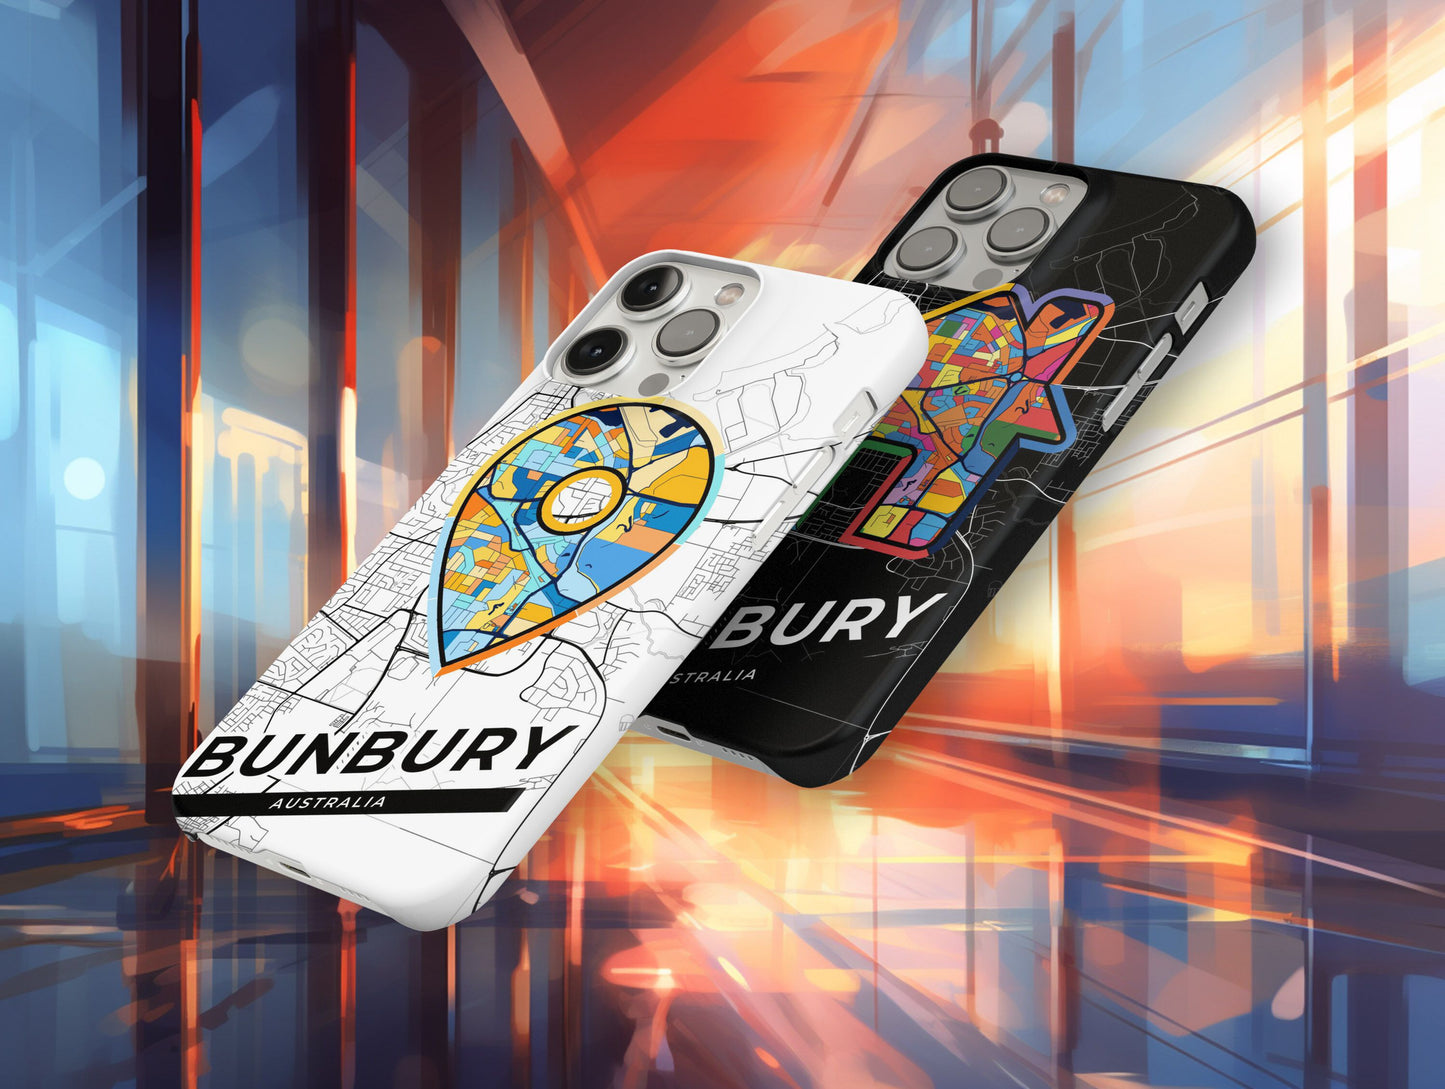 Bunbury Australia slim phone case with colorful icon. Birthday, wedding or housewarming gift. Couple match cases.